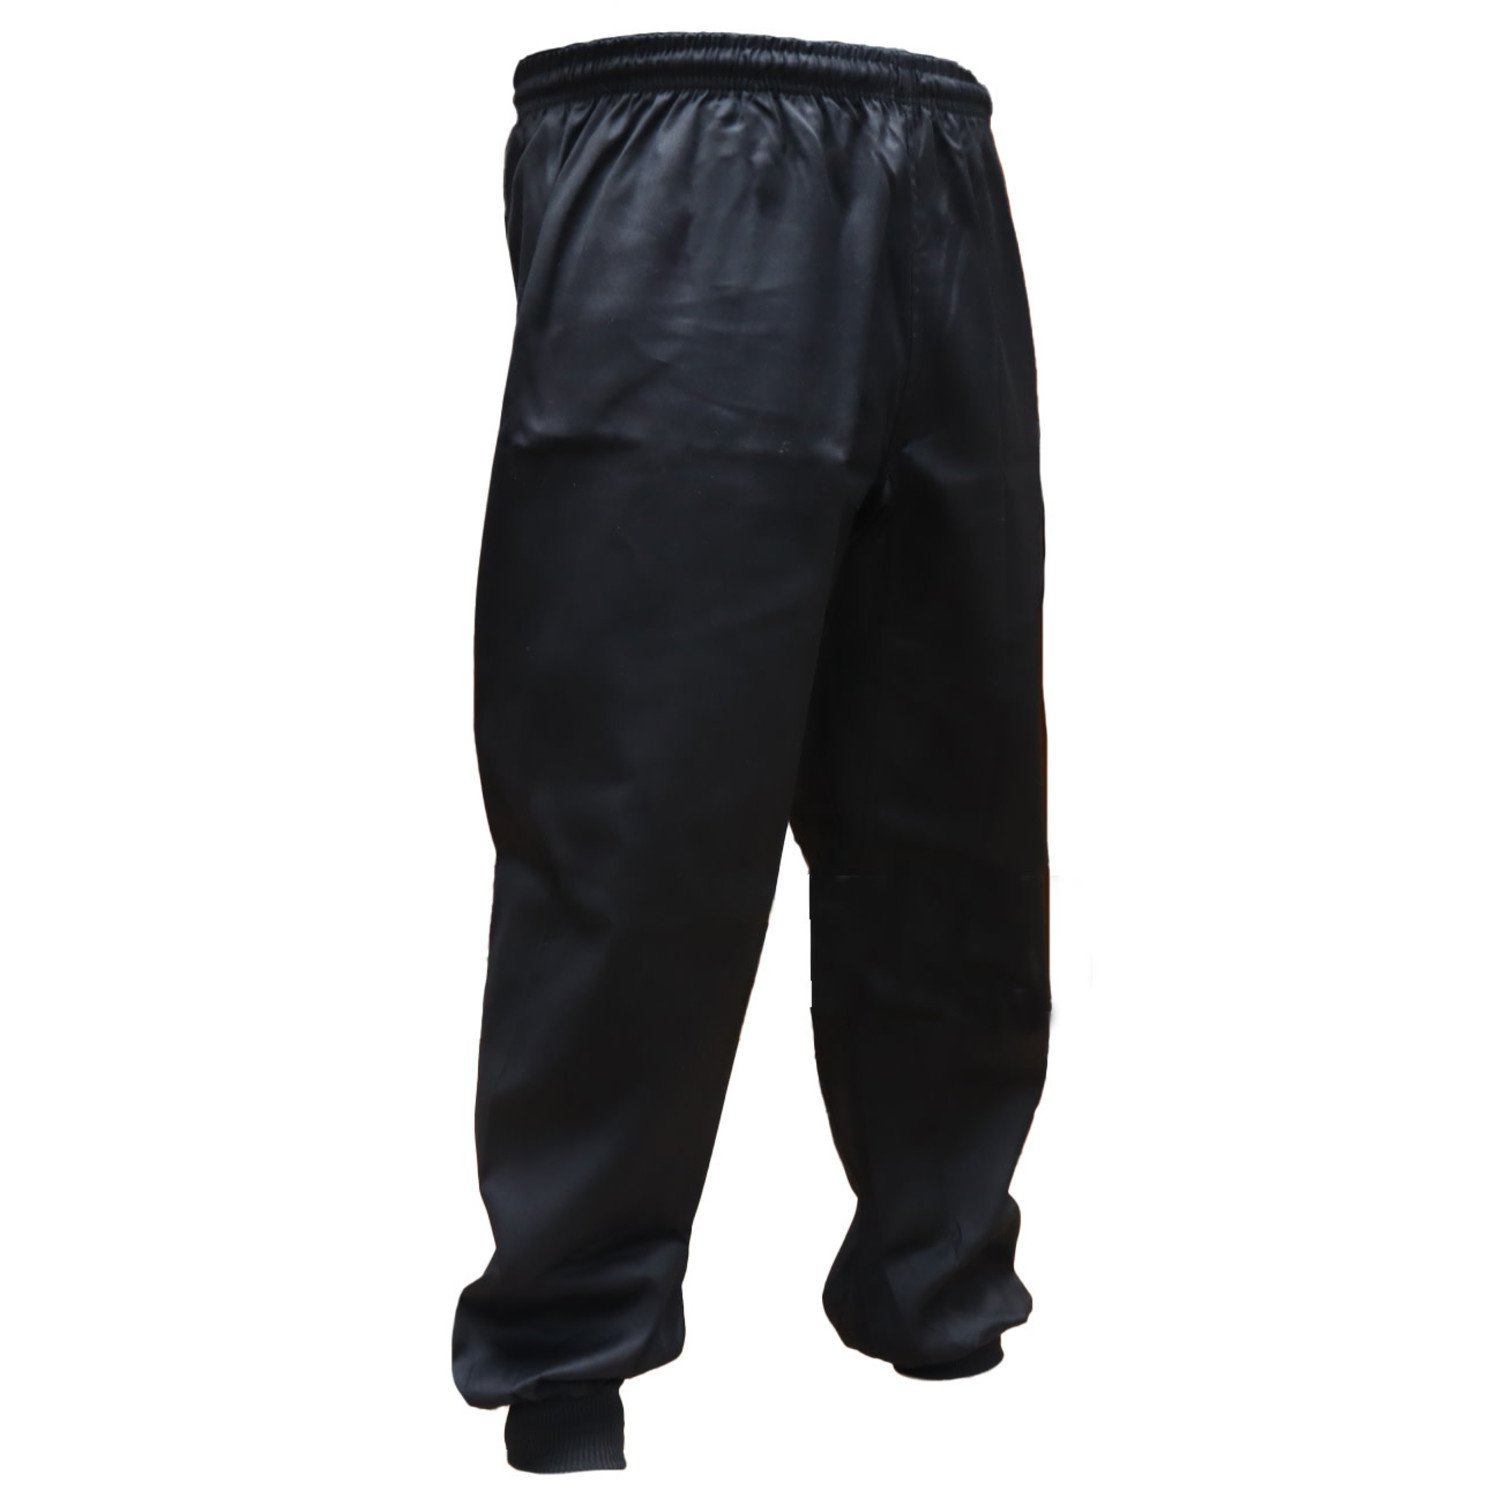 Buy Mens Martial Arts Pants Kung Fu Cotton Trousers M Black at Amazonin